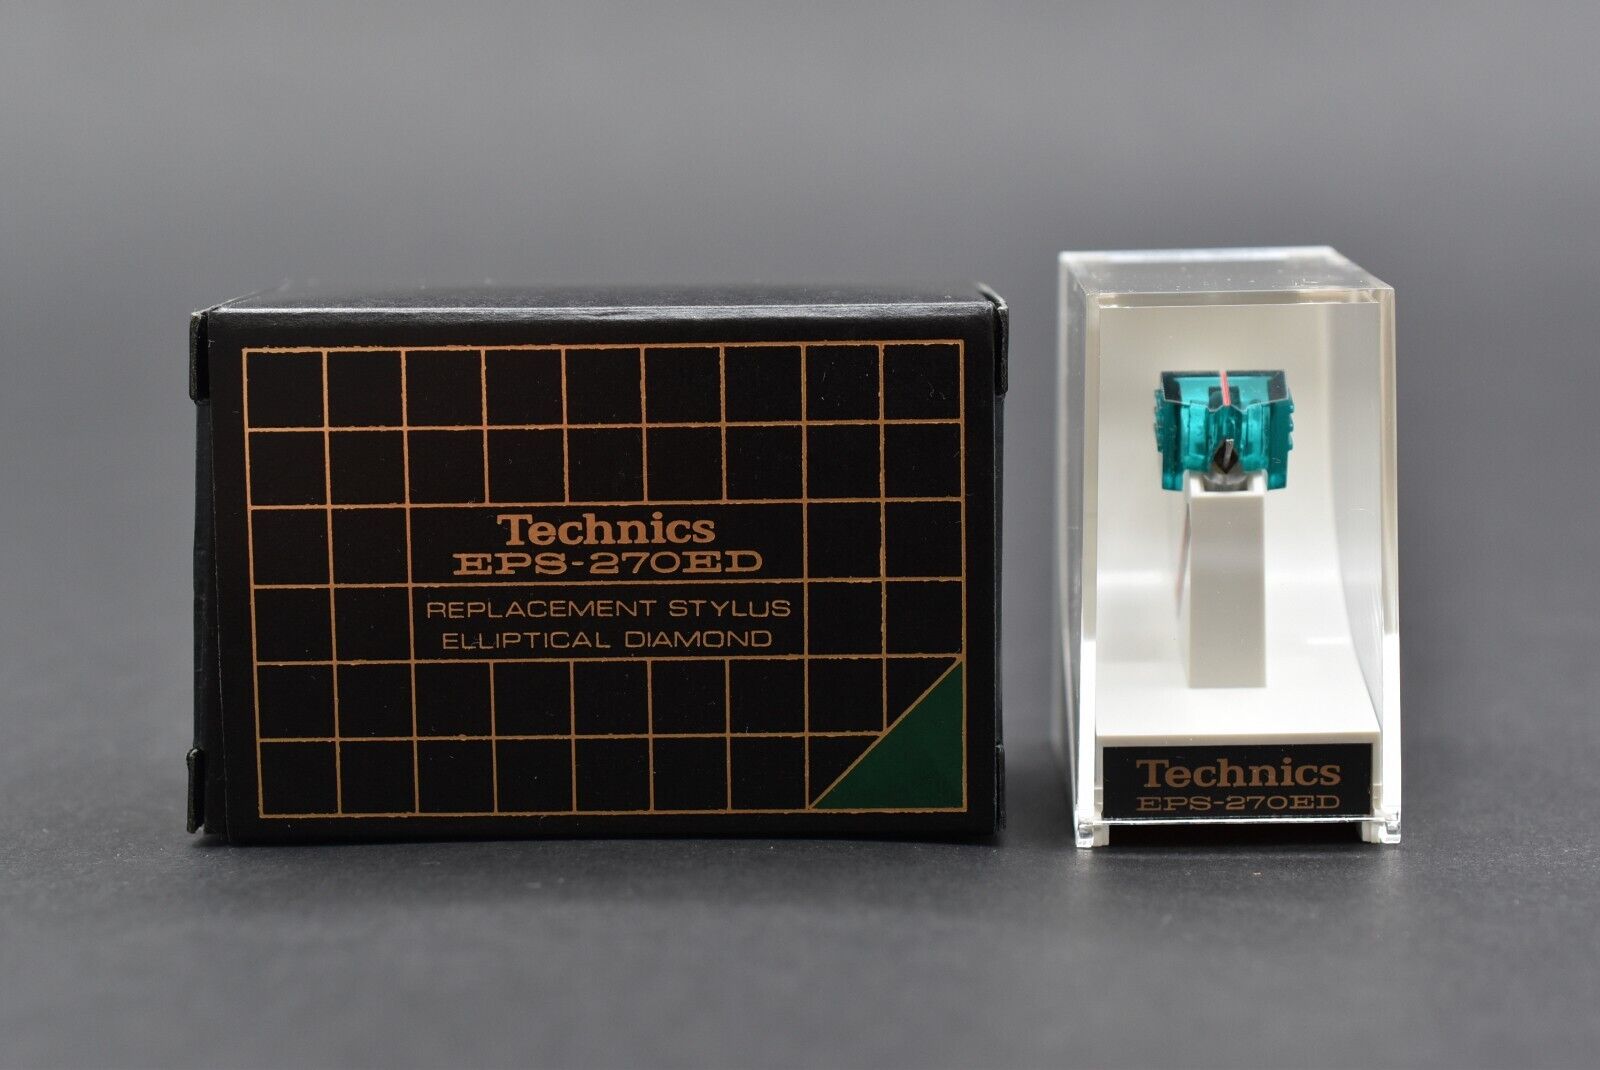 MIB! Technics EPS-270ED Original Replacement Stylus Needle for EPC-270C